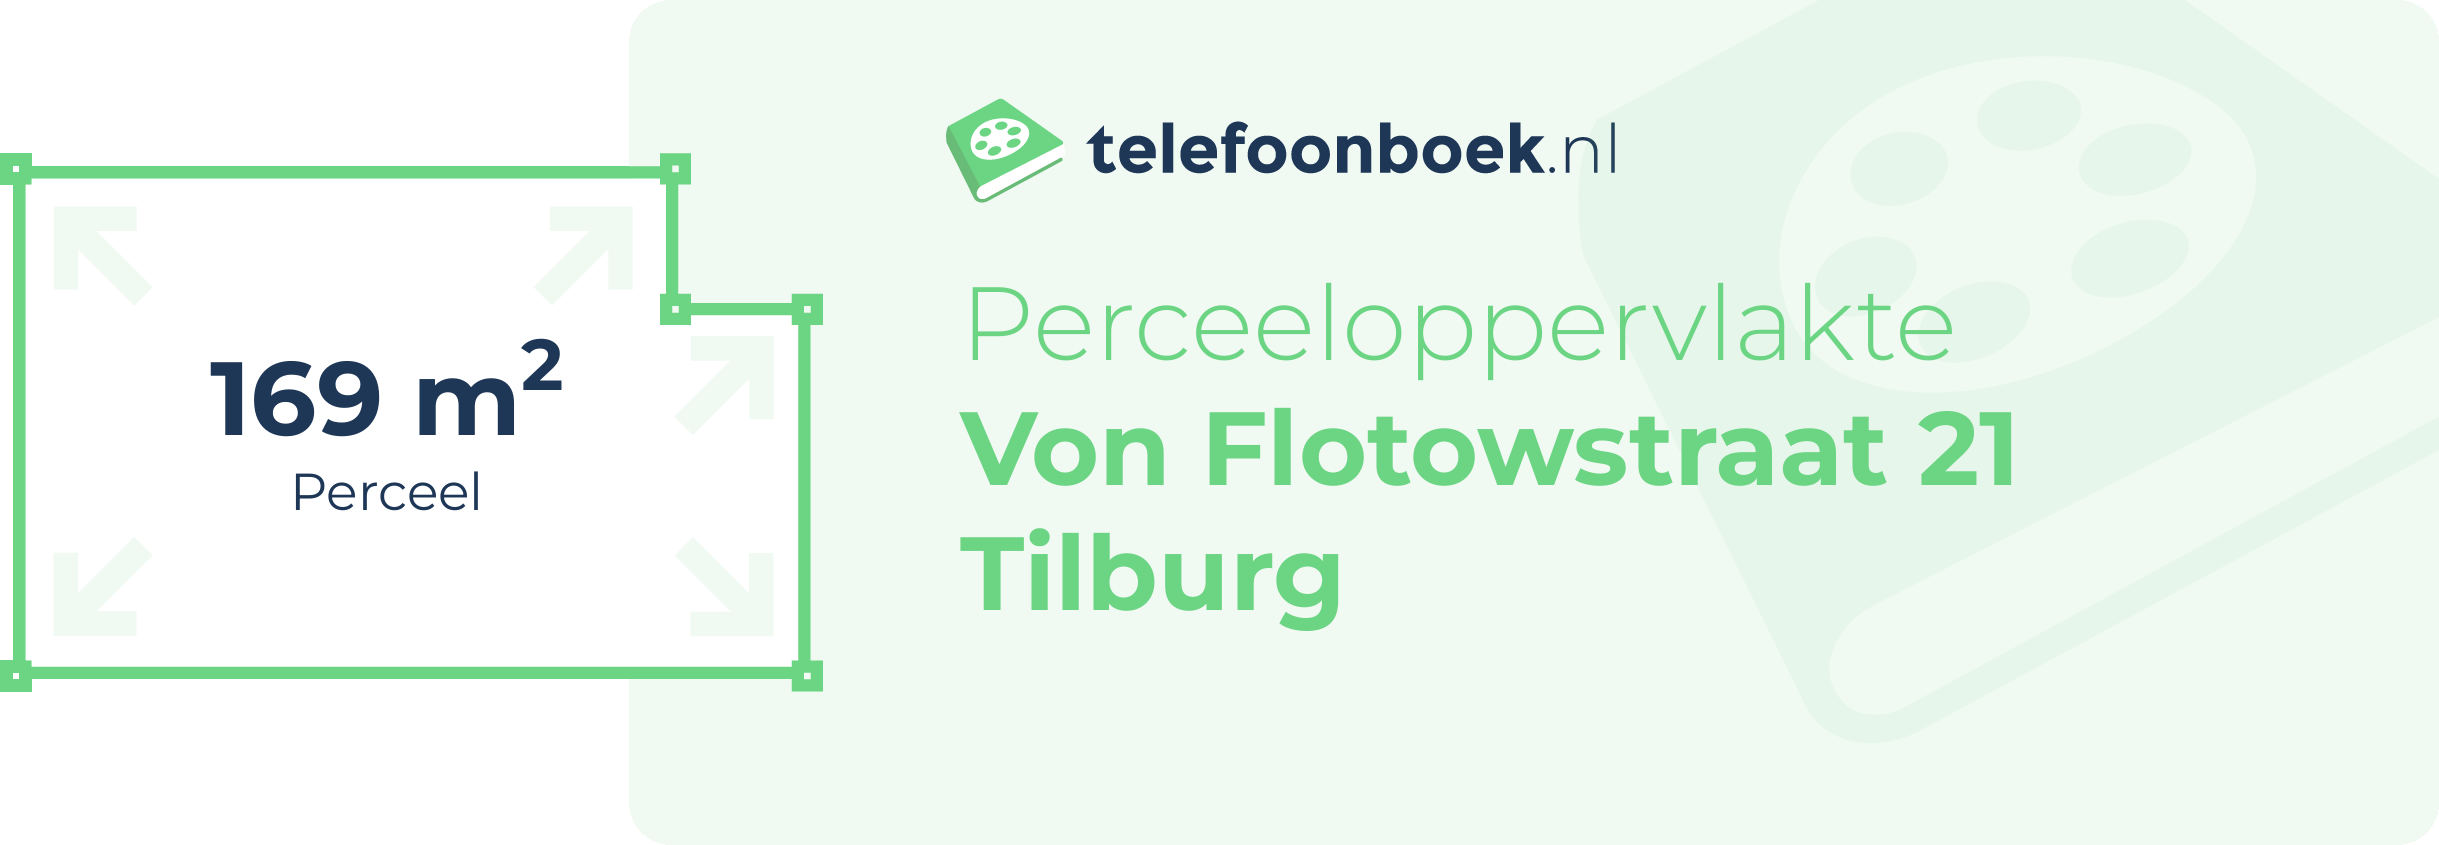 Perceeloppervlakte Von Flotowstraat 21 Tilburg